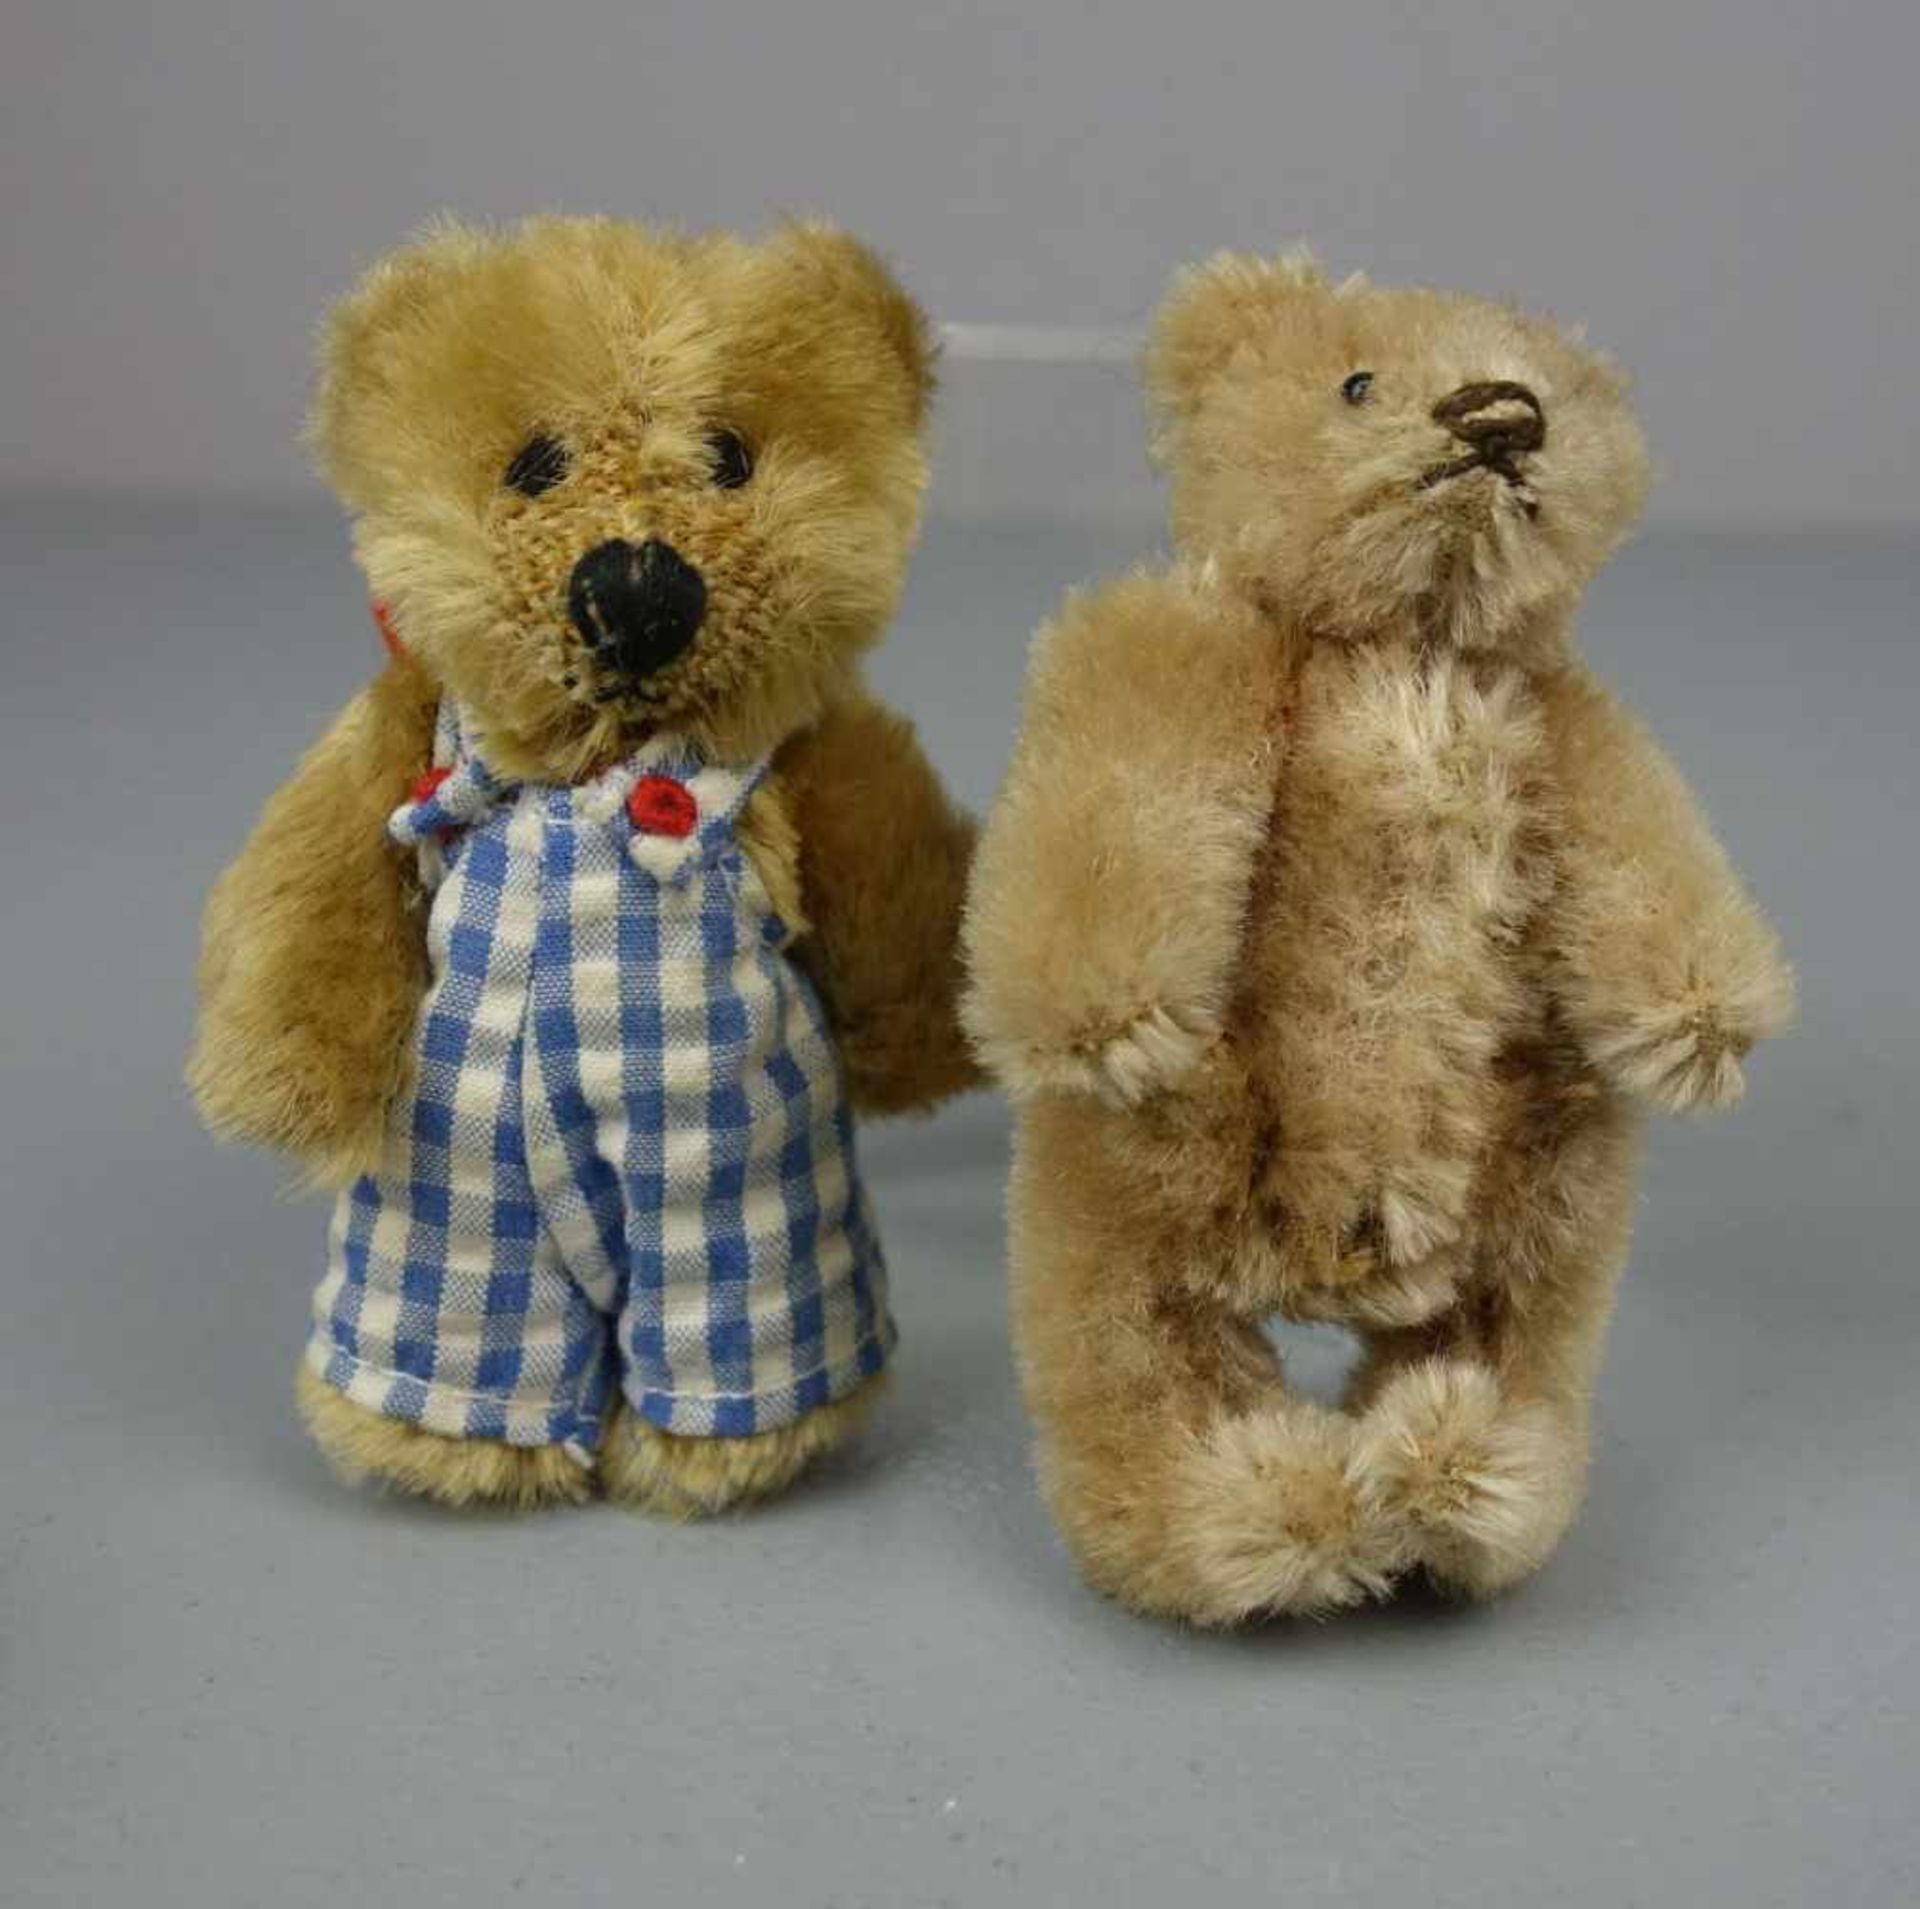 PLÜSCHTIERE / TEDDYBÄREN: Konvolut Miniatur Teddys / Bären - 6 Stück / six teddy bears, 20. Jh., - Bild 3 aus 8